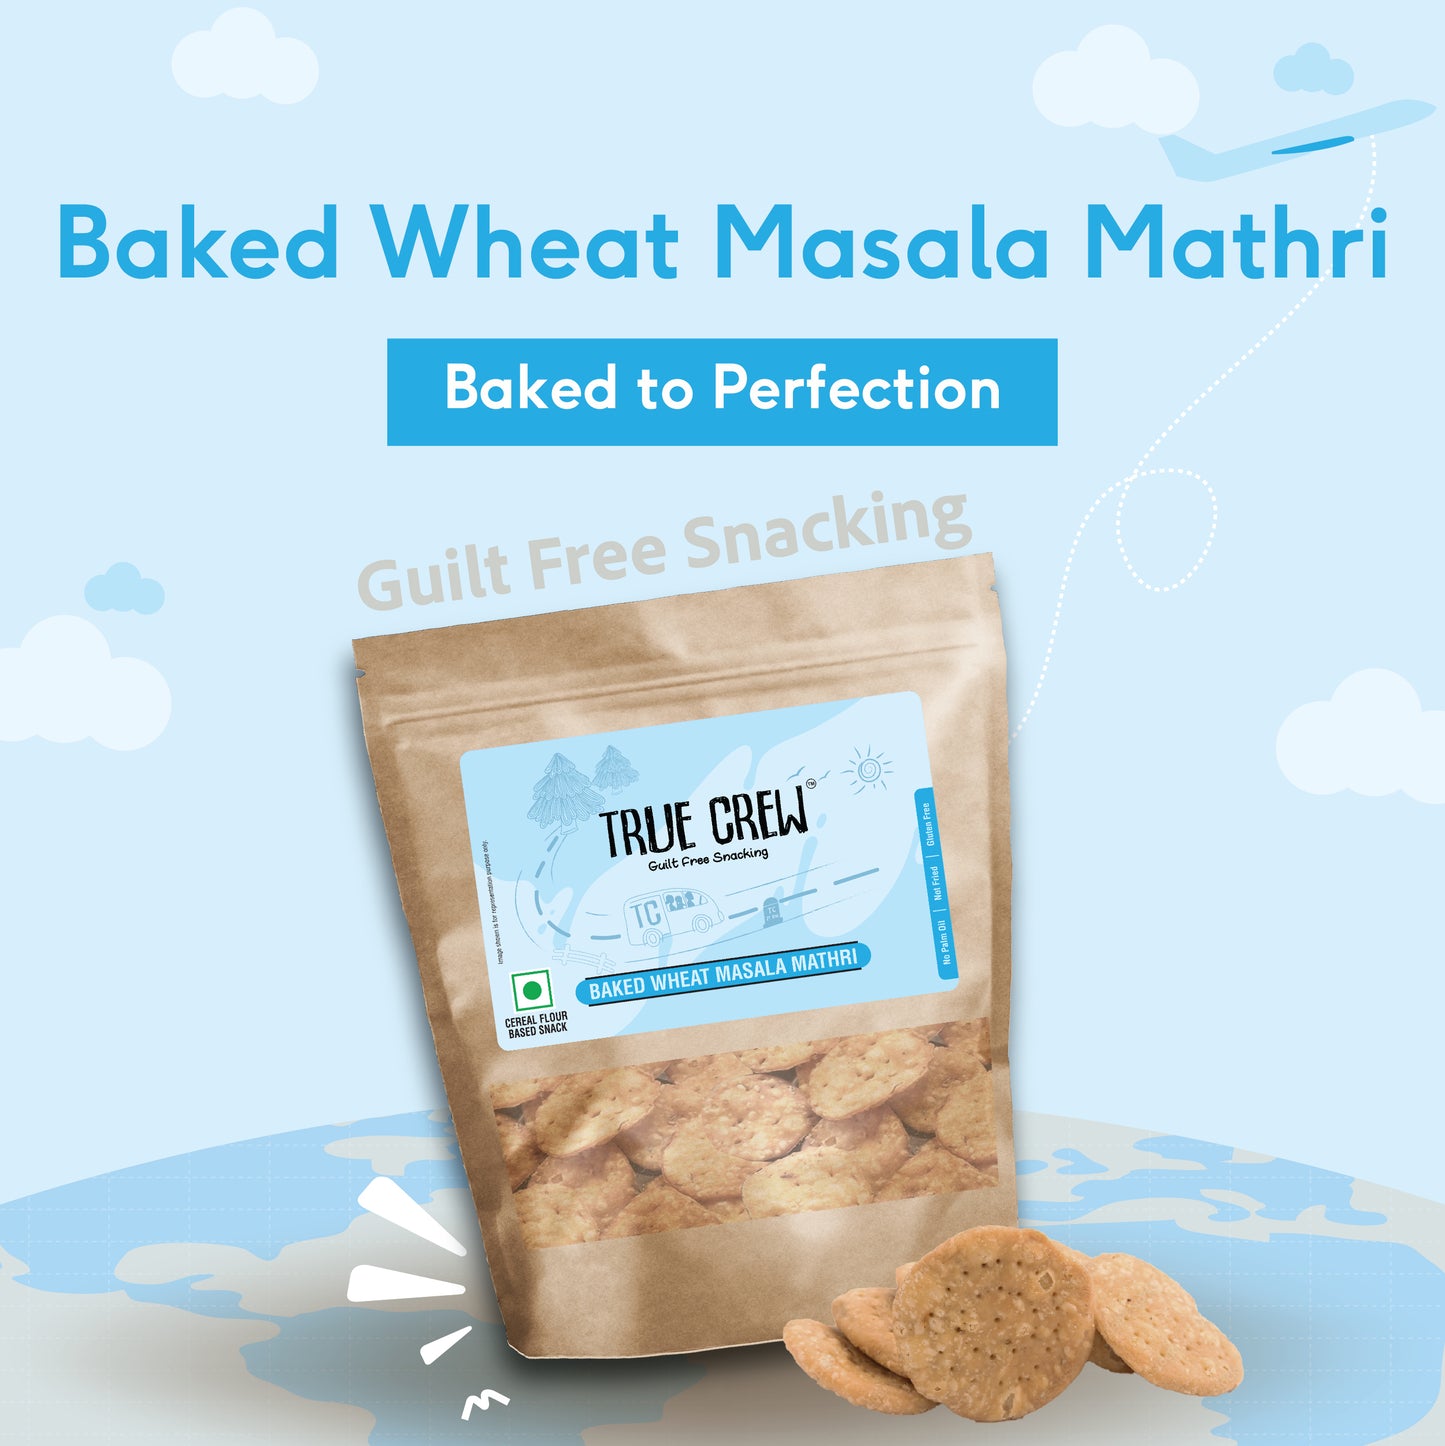 TRUE CREW - Baked Wheat Masala Mathri, 100 g